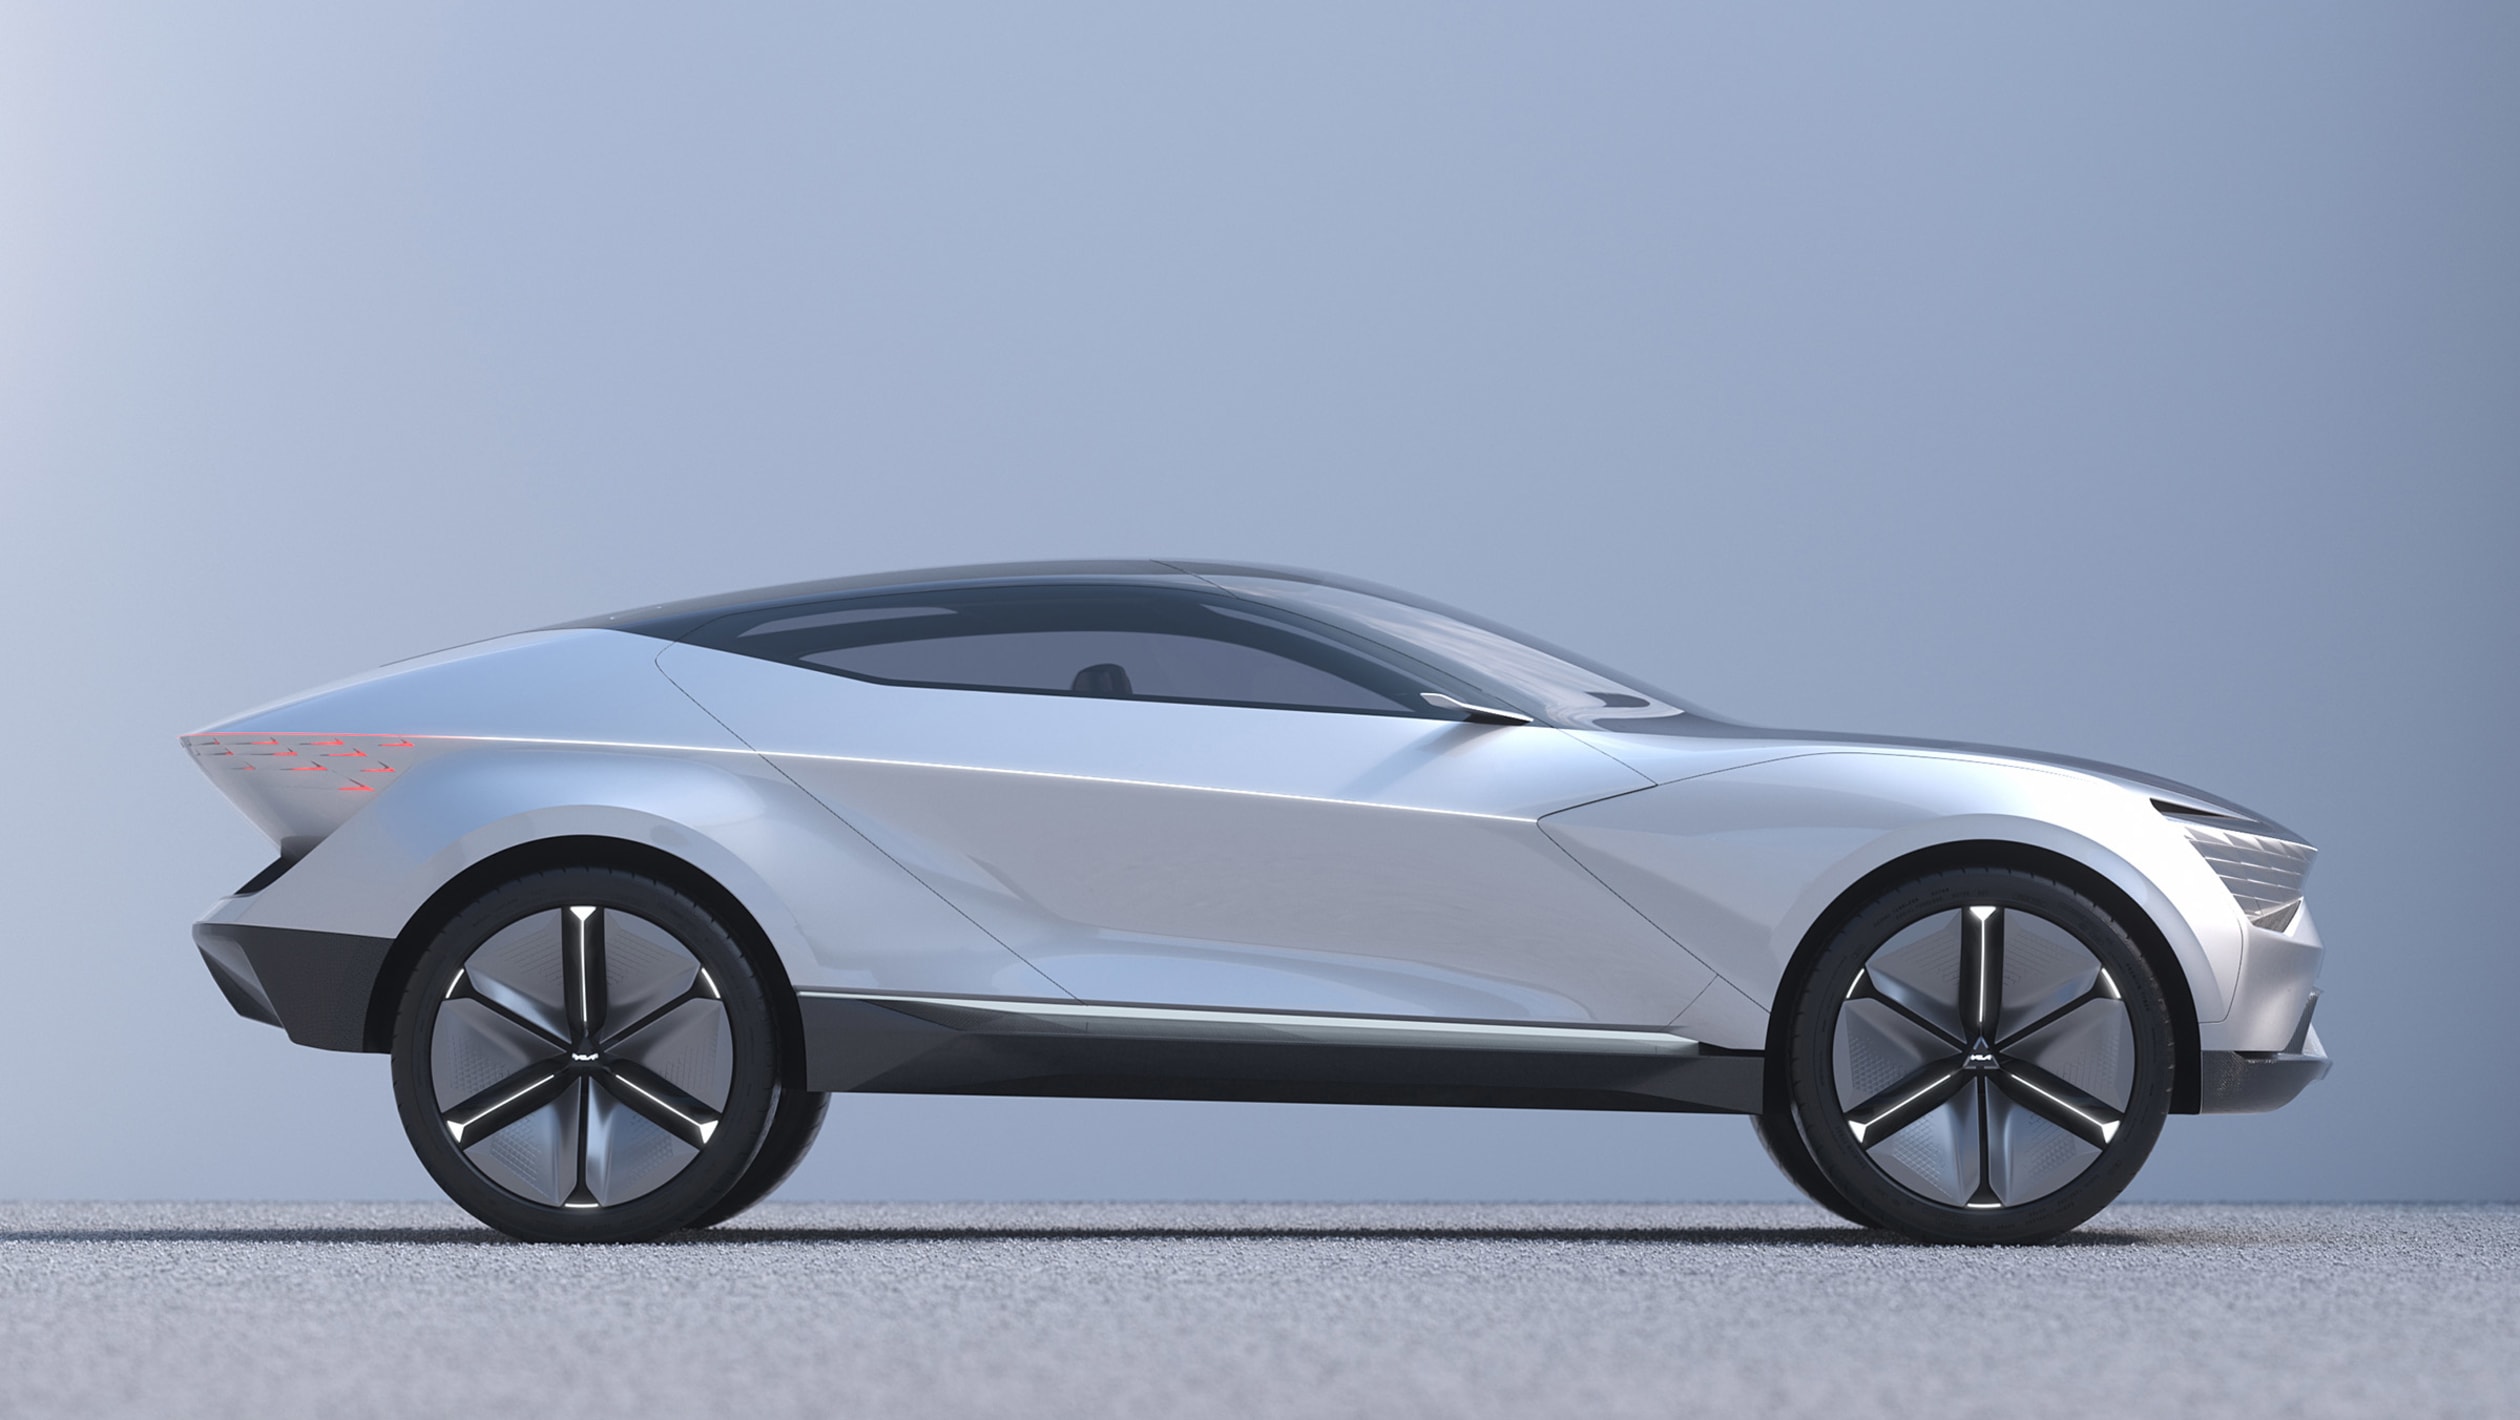 Kia Futuron concept previews new electric SUV - pictures | Auto Express